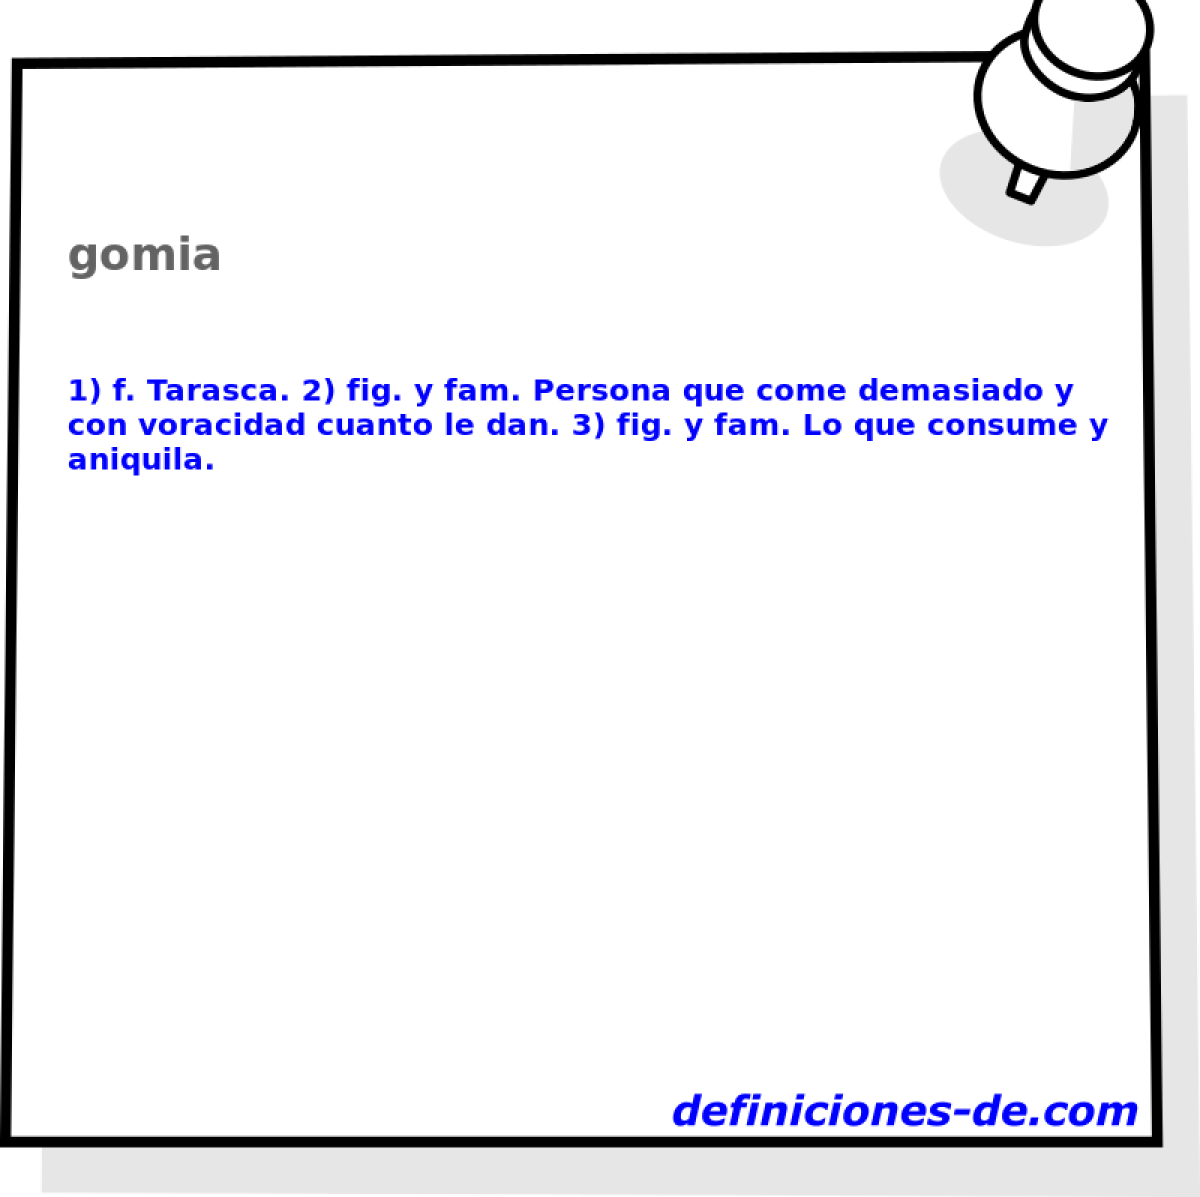 gomia 